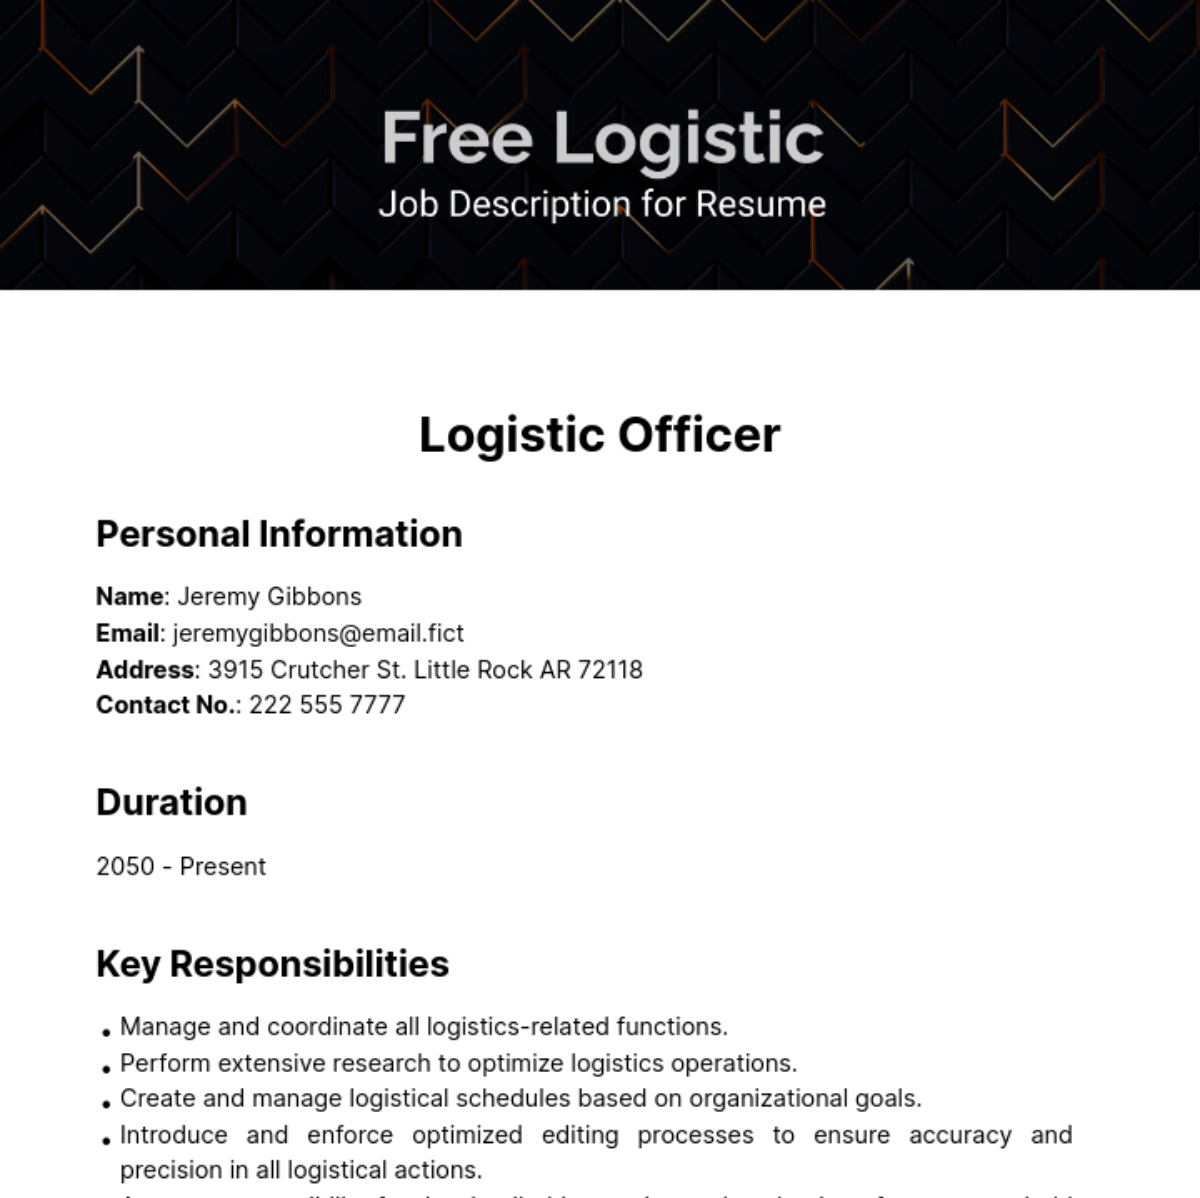 Free Logistics Job Description For Resume Template